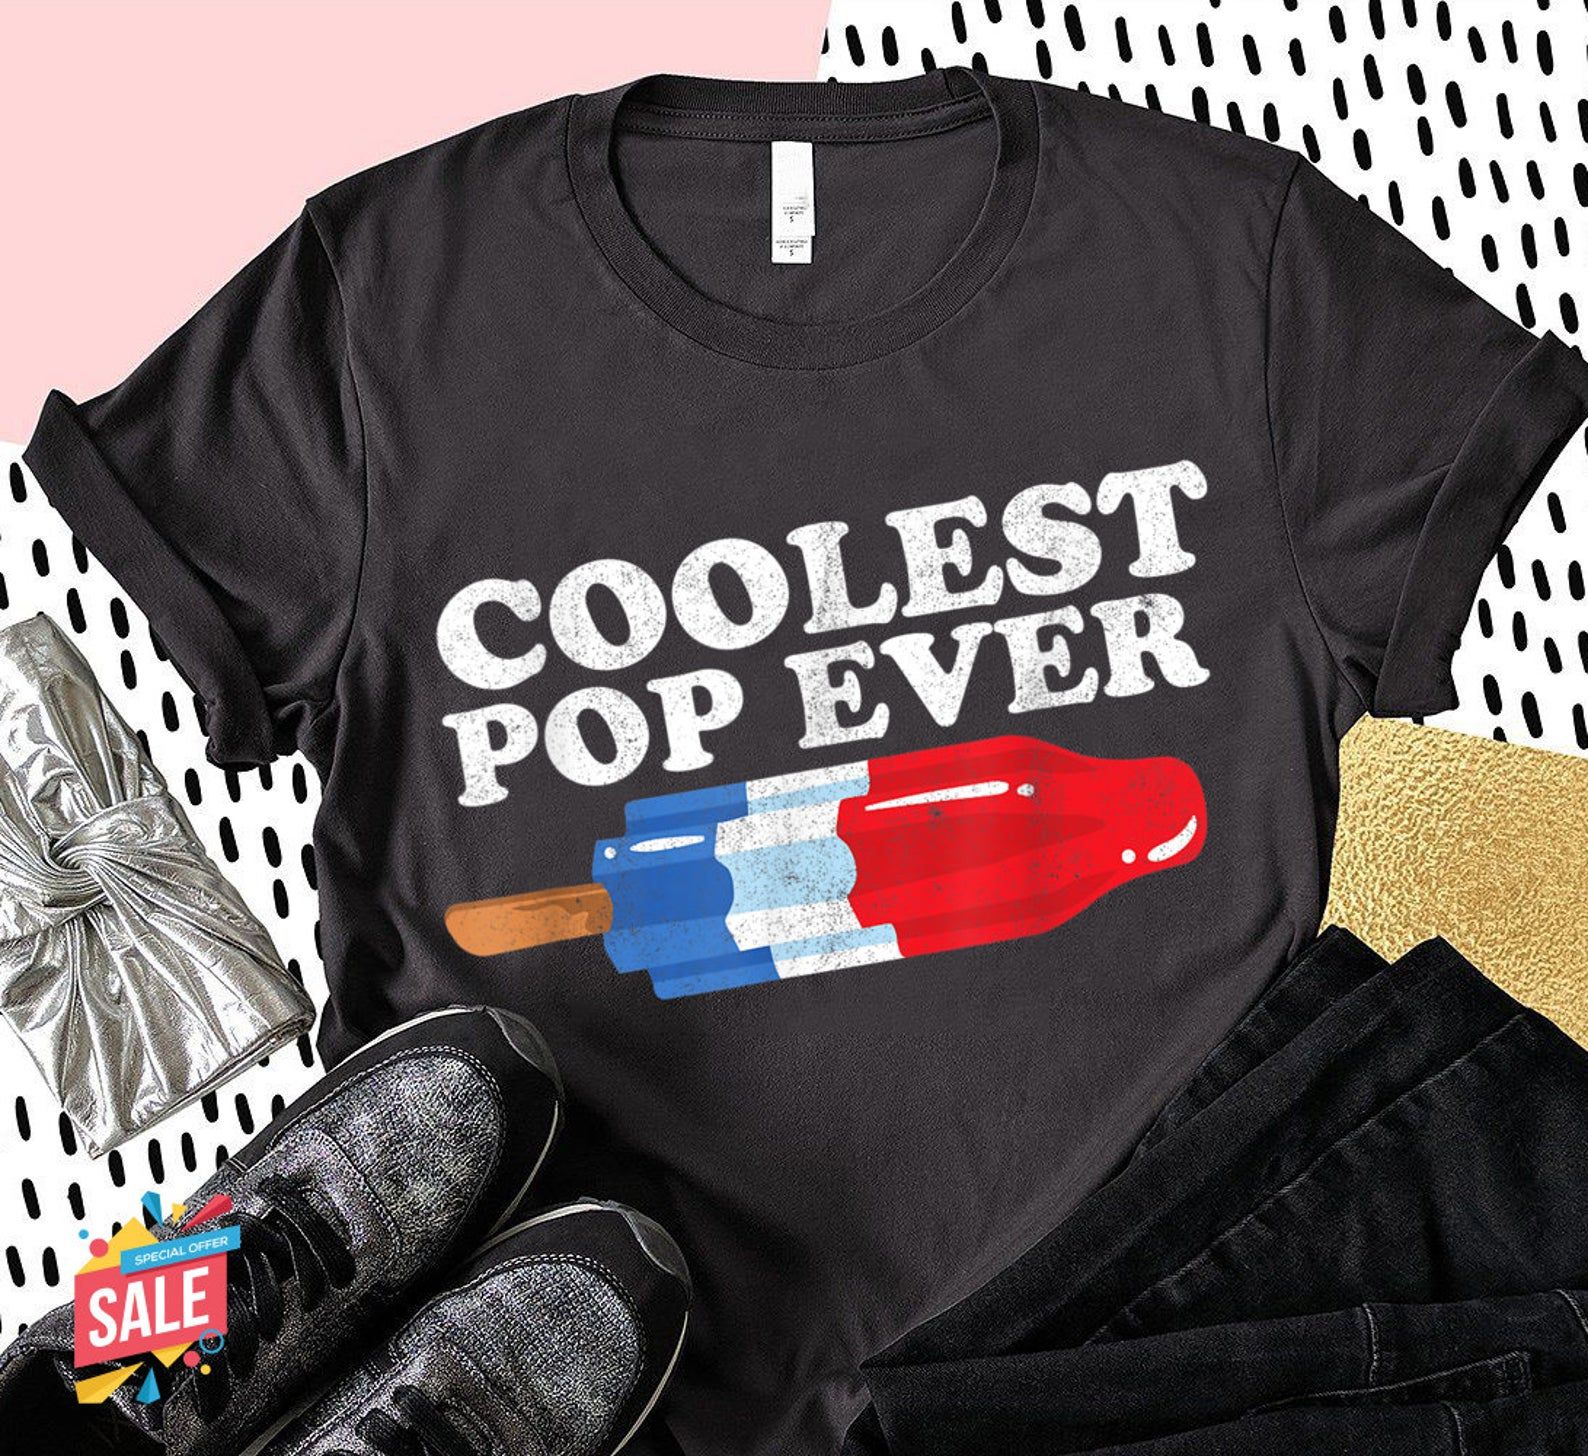 Coolest Pop Ever Shirt Popsicle Funny Retro Bomb The Coolest Pop ...